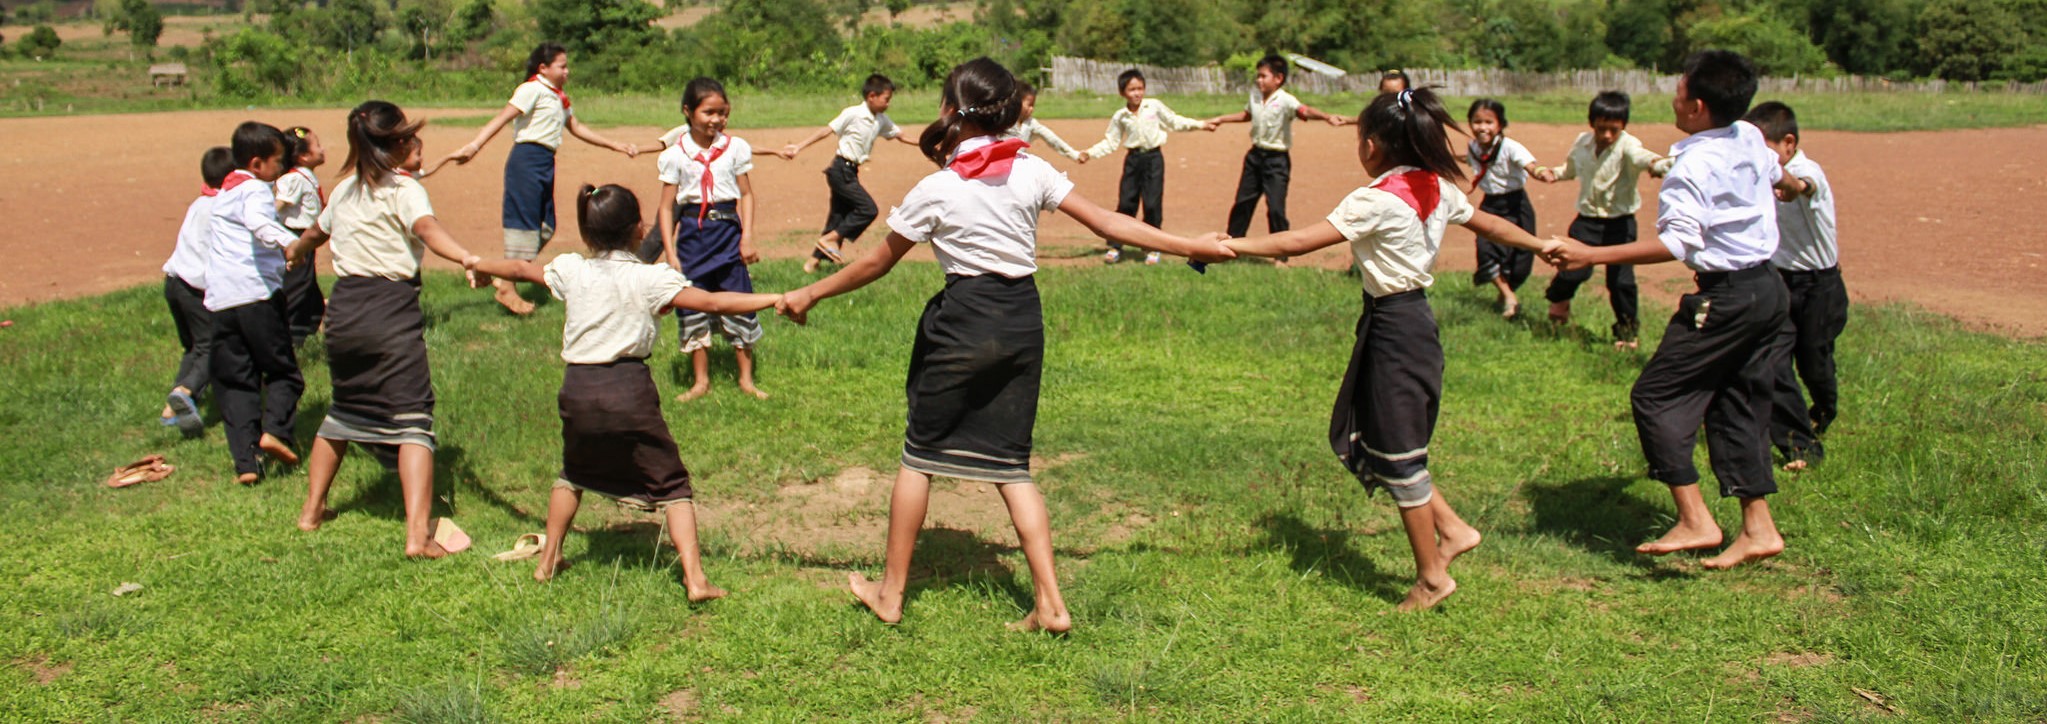 School children in Laos (Photo: Flickr/Asian Development Bank)